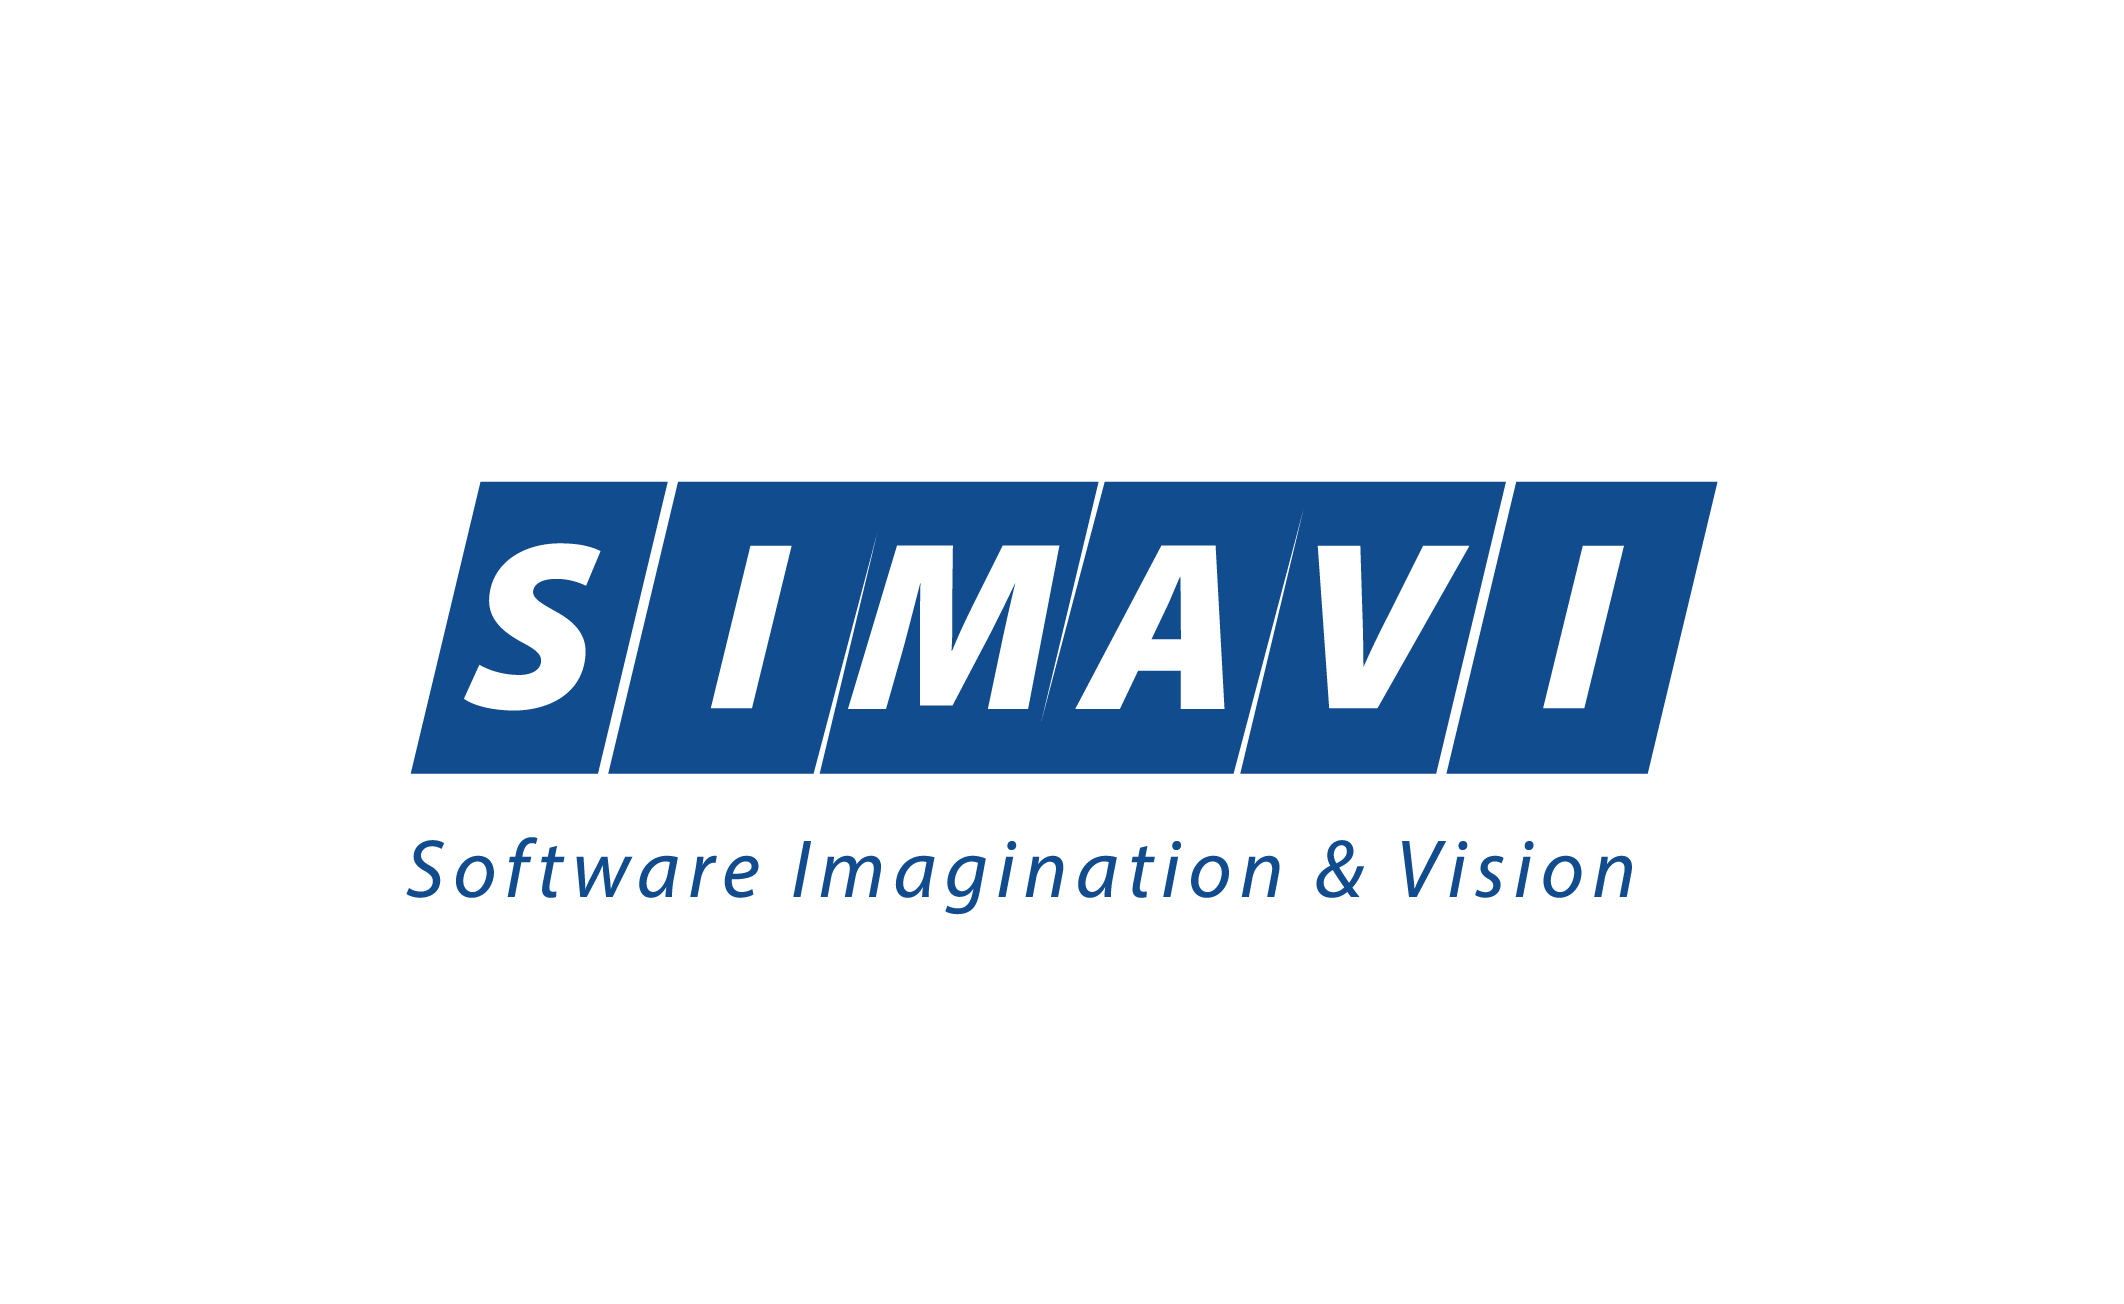 The logo of SIMAVI, links to the website of SIMAVI